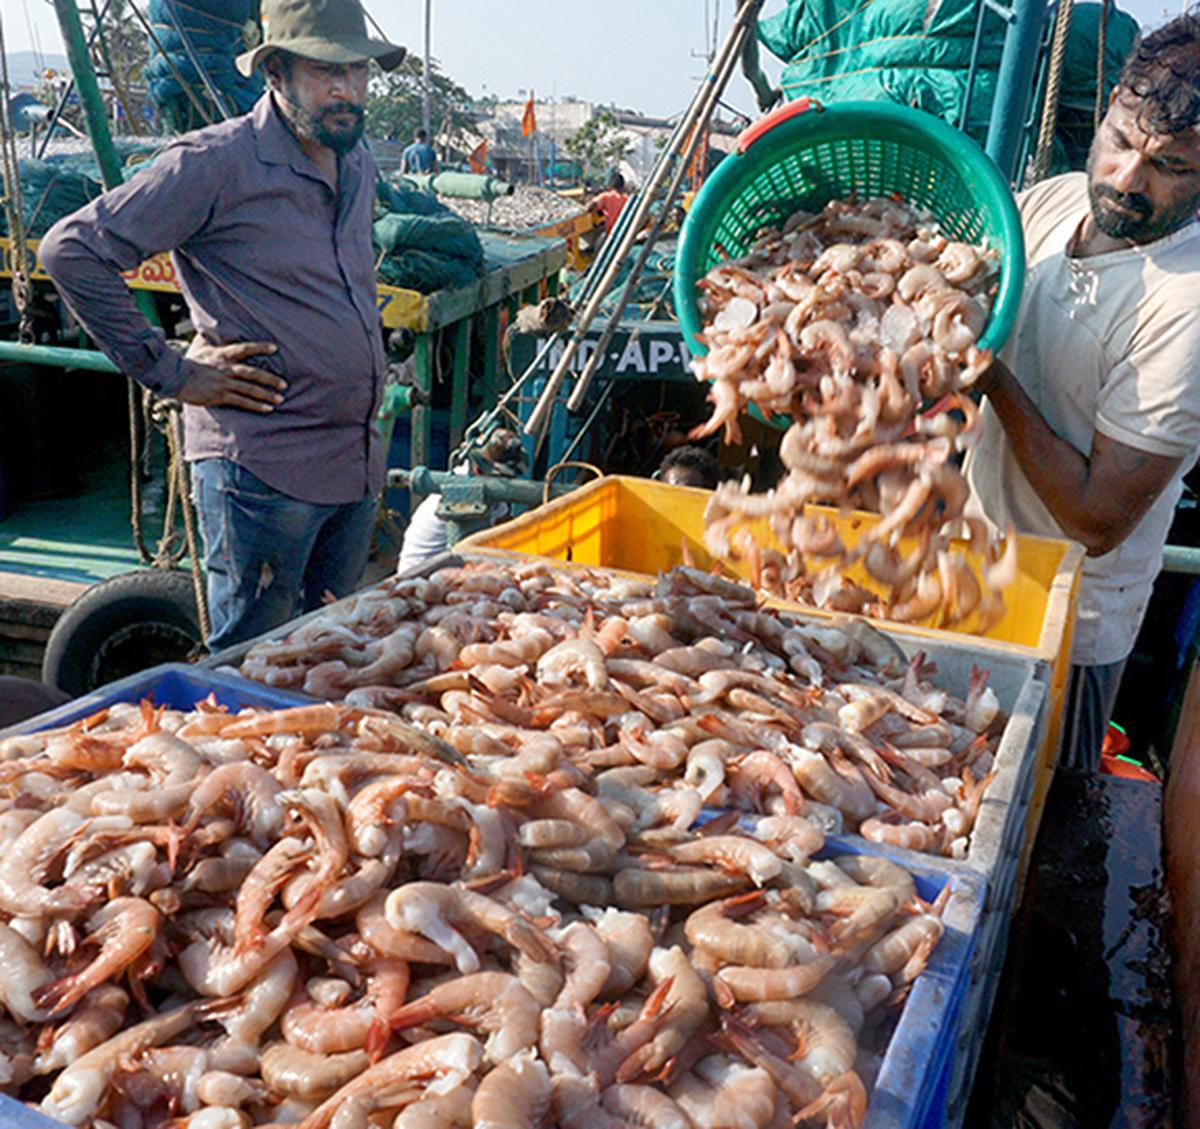 India exports seafood worth ₹63,969 crore - The Hindu